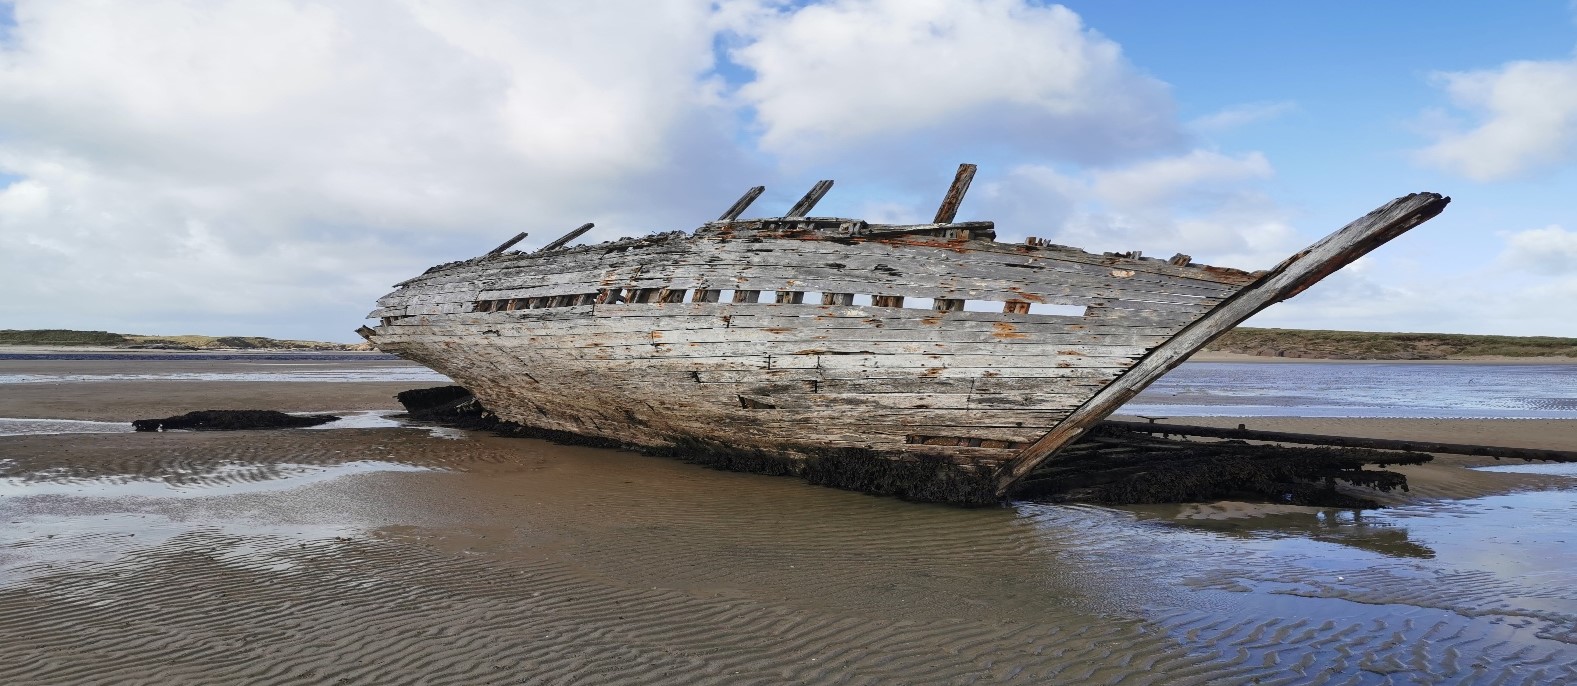 Donegal trawler wreck on Gweedore beach 